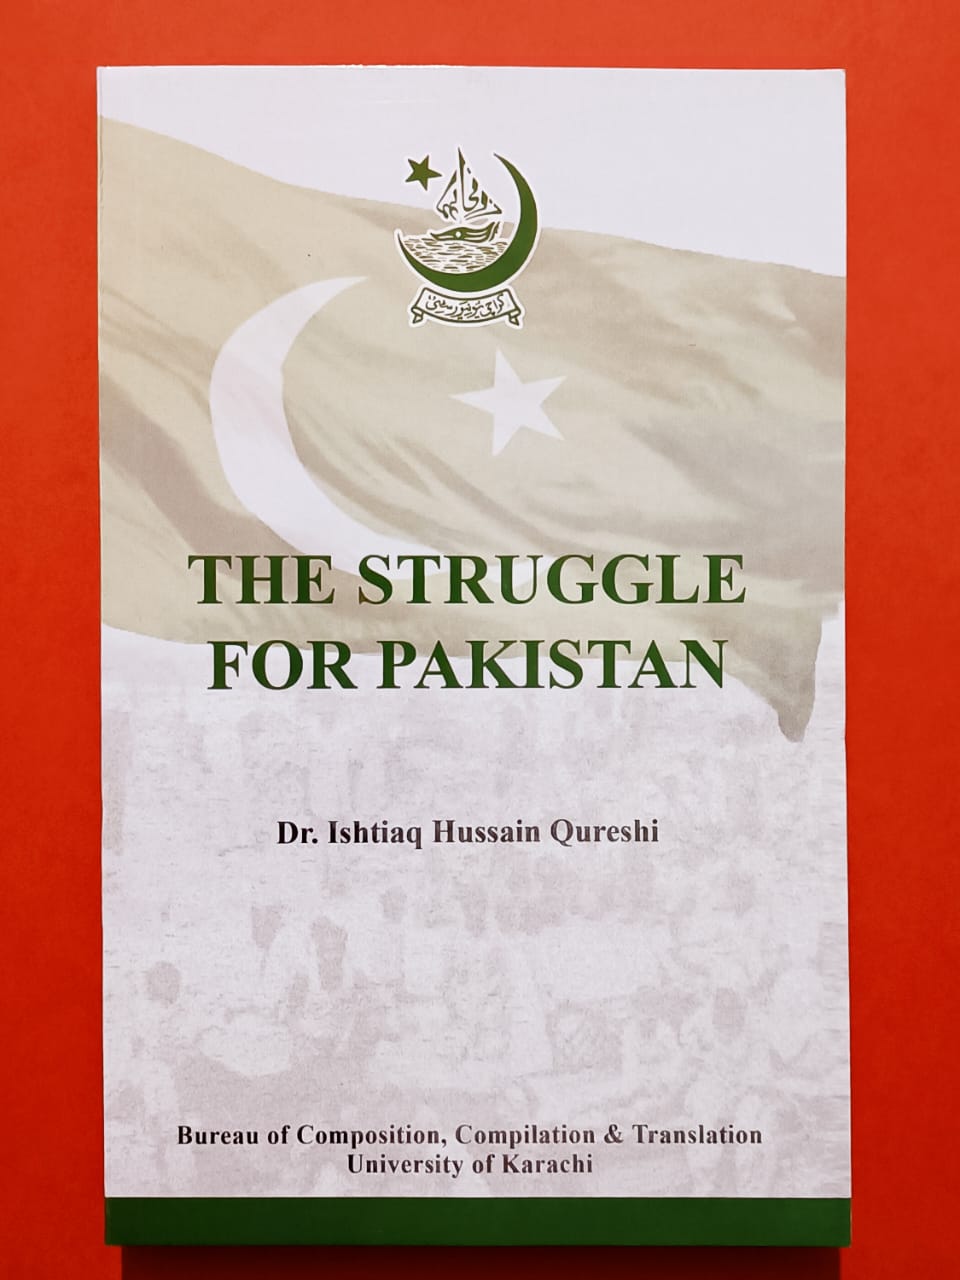 The struggle for Pakistan